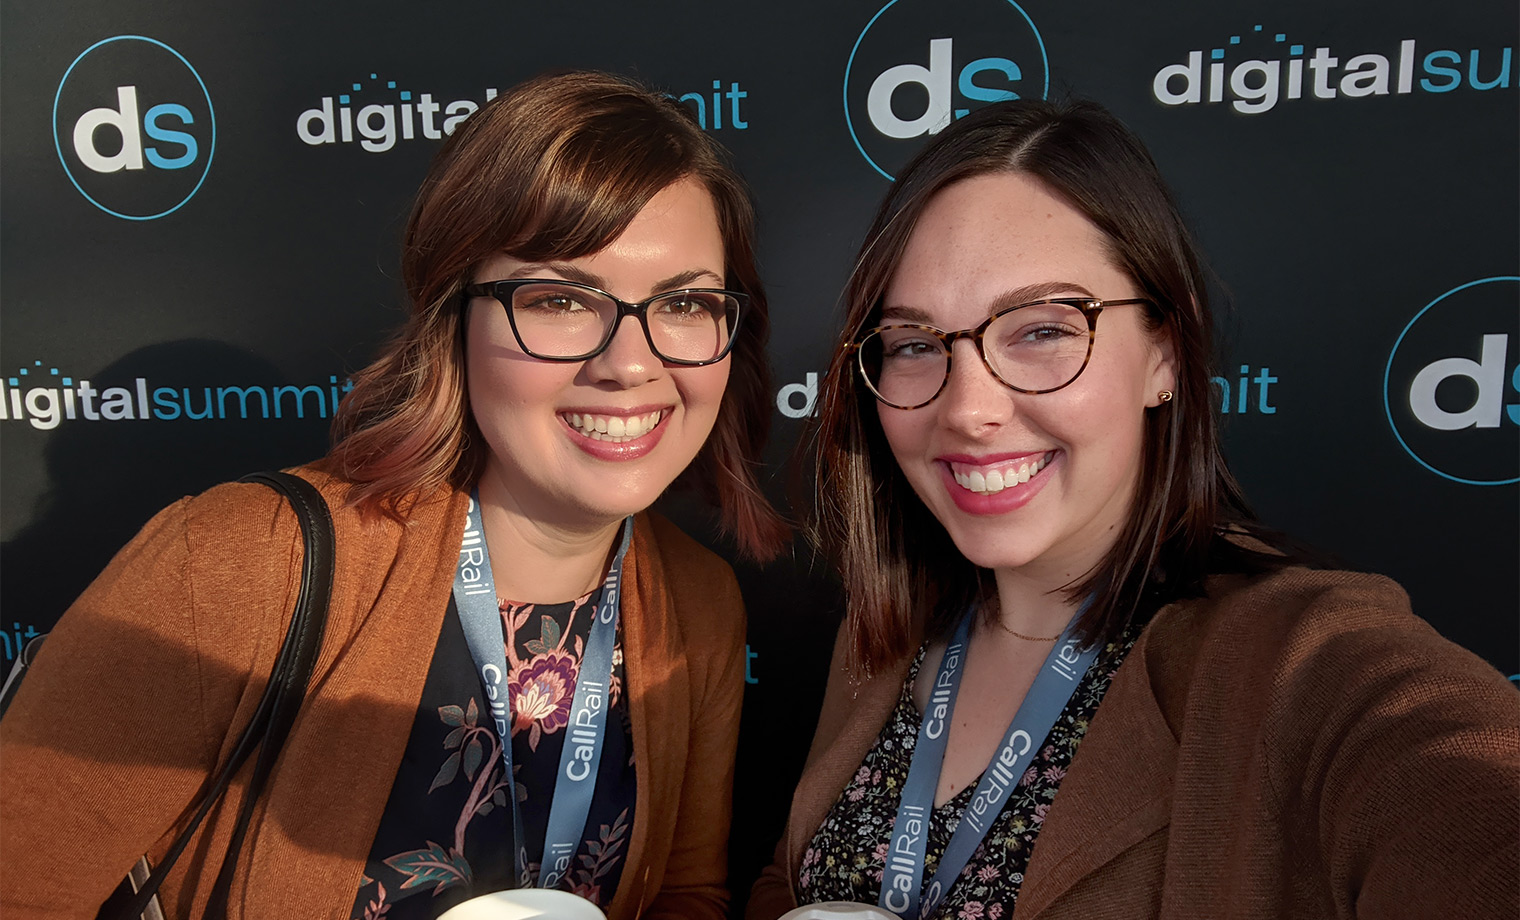 Our Top Takeaways From Digital Summit Detroit